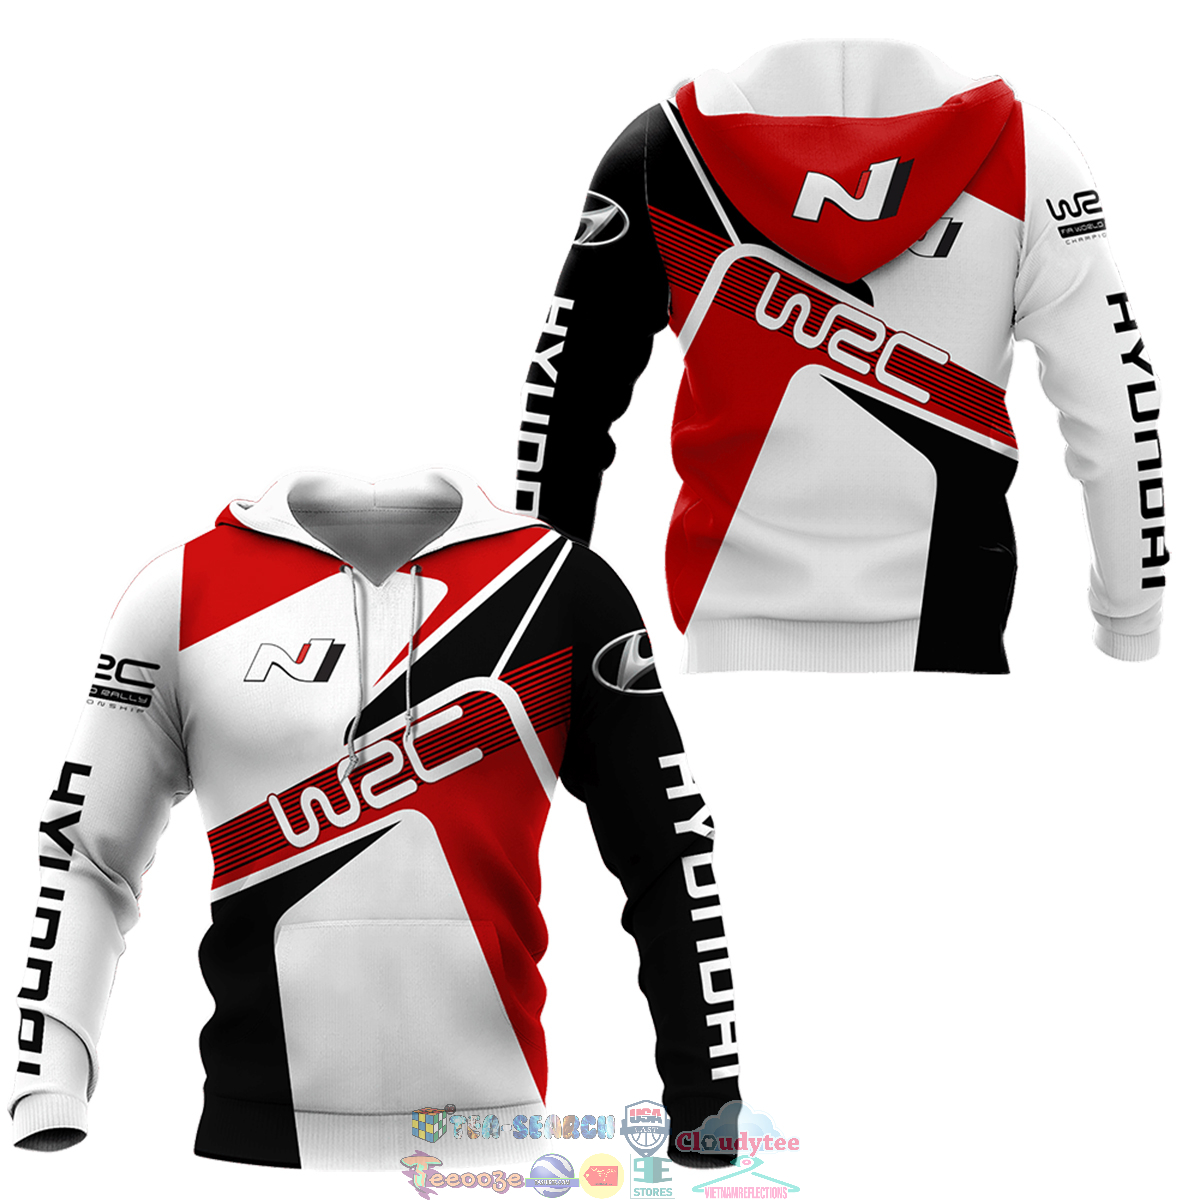 oa9RDHgb-TH100822-31xxxHyundai-Motorsport-ver-5-3D-hoodie-and-t-shirt3.jpg